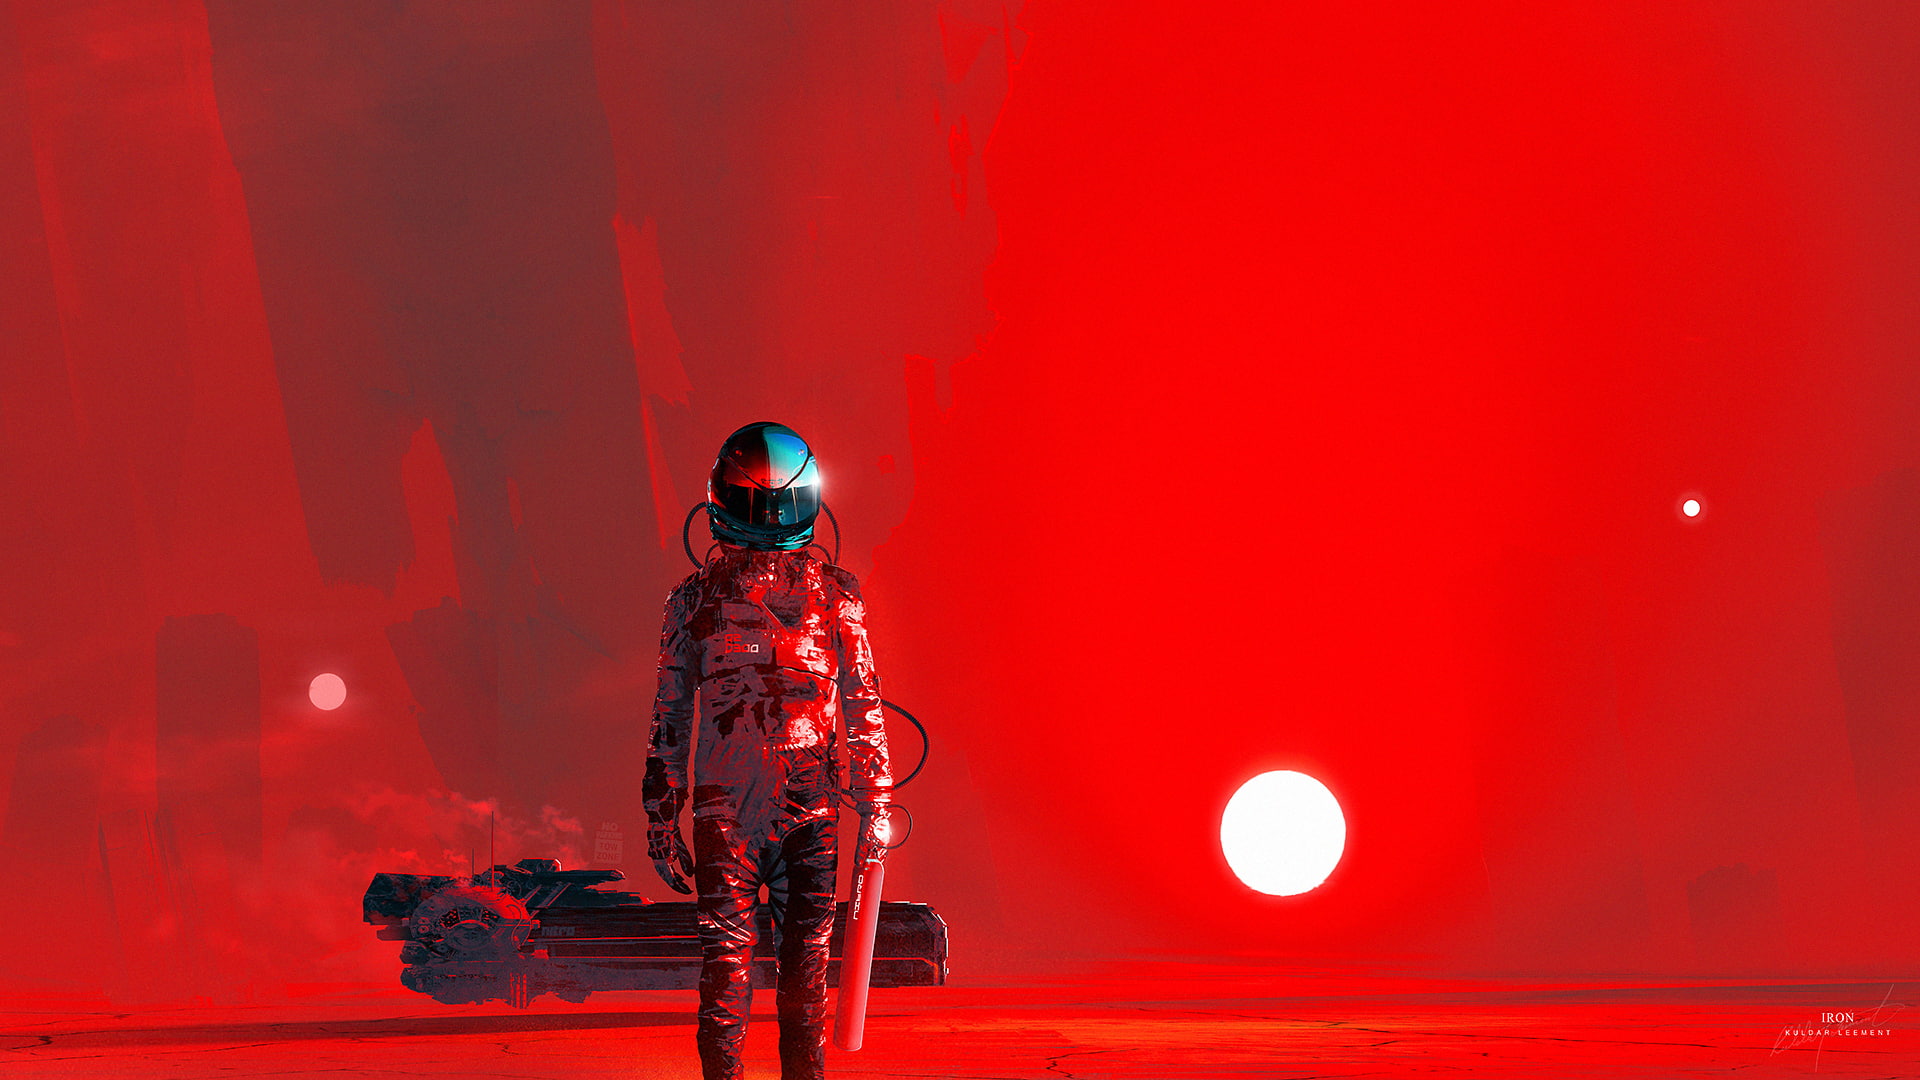 Kuldar Leement, futuristic, red background, astronaut, fantasy art